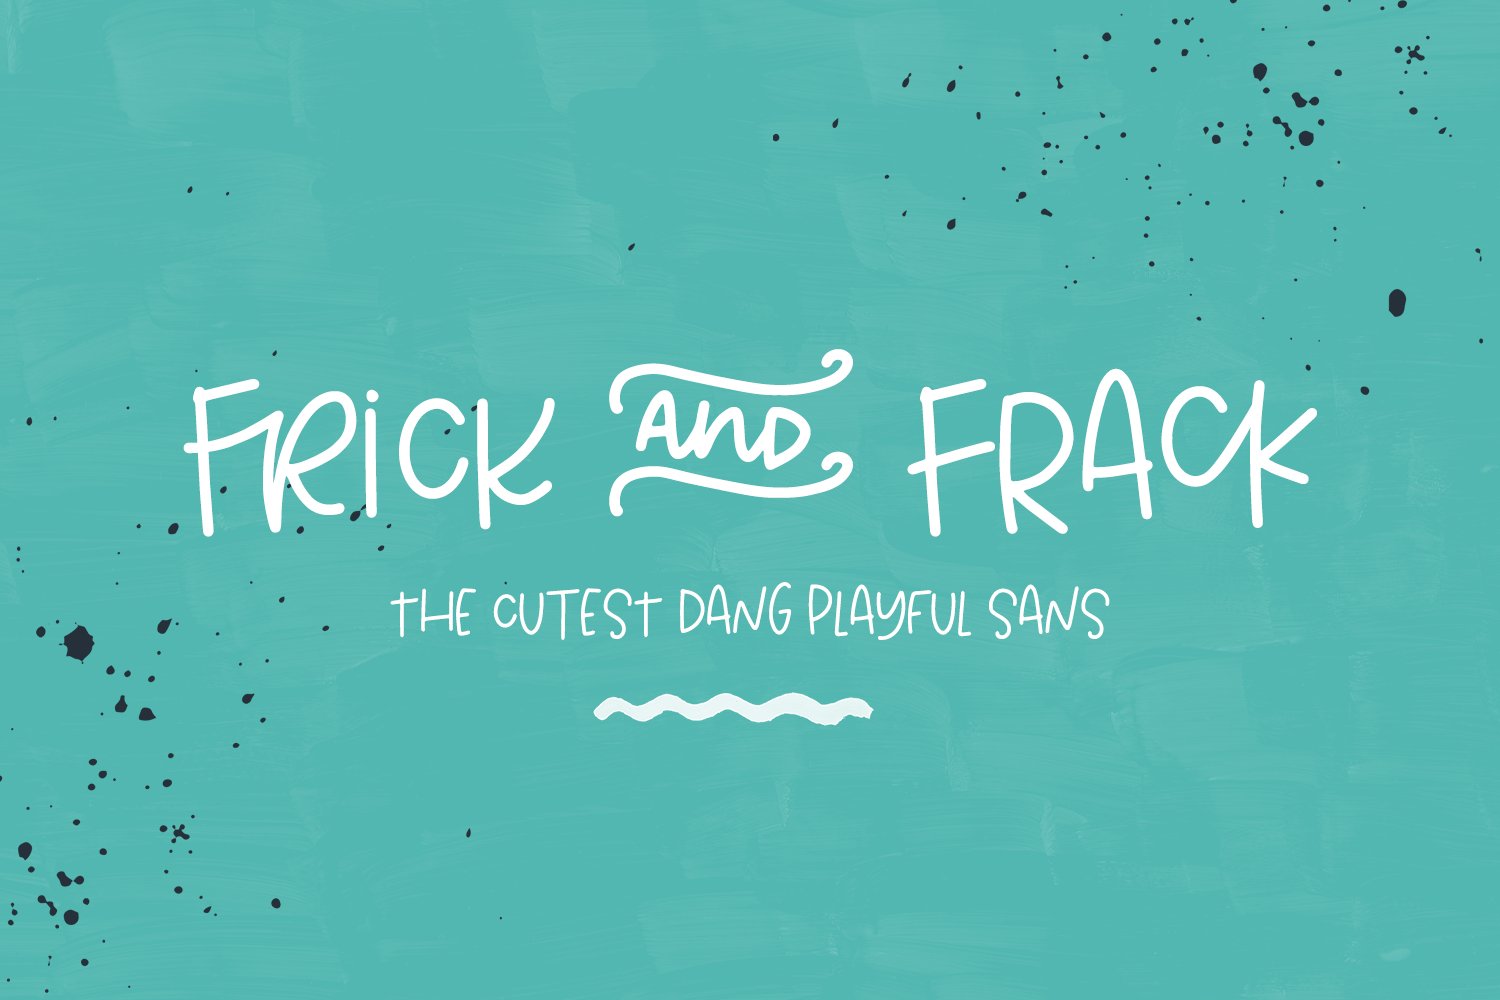 Frick and Frack Sans cover image.